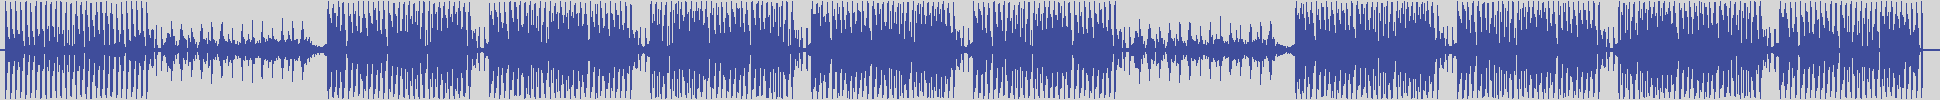 nf_boyz_records [NFY065] Beats Control - Useless to Speak [House Edit Mix] audio wave form